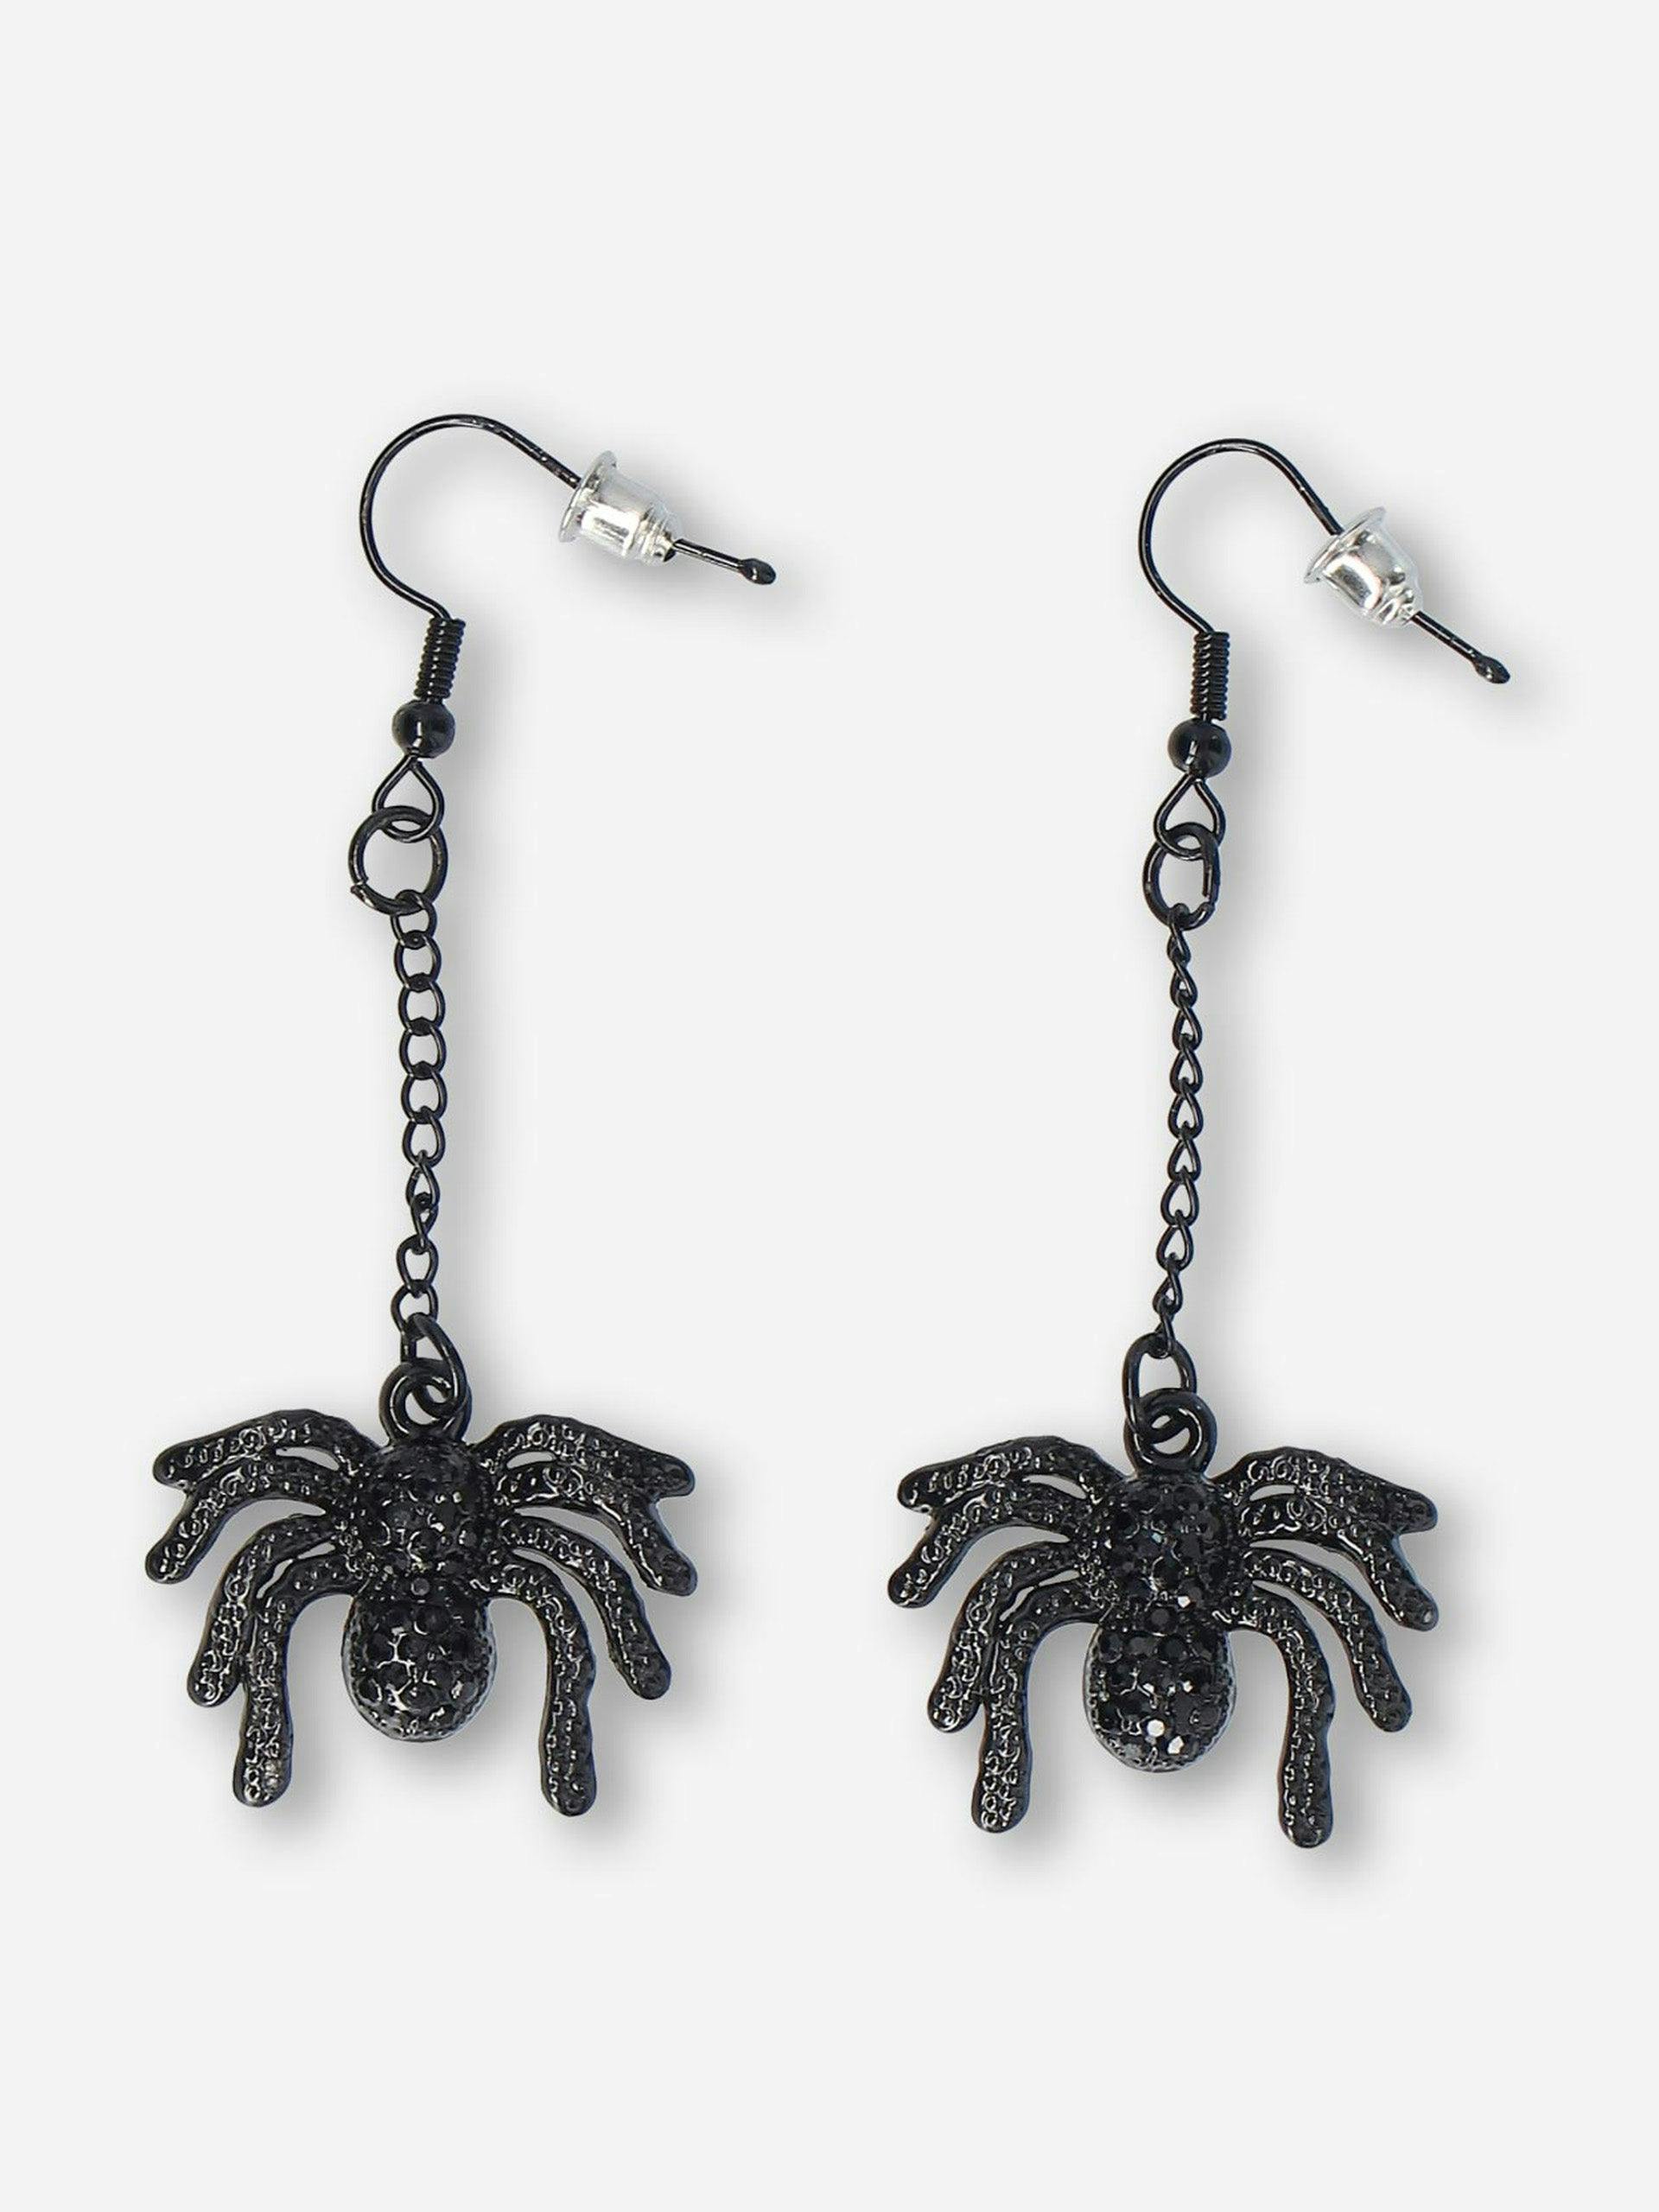 Spider earrings